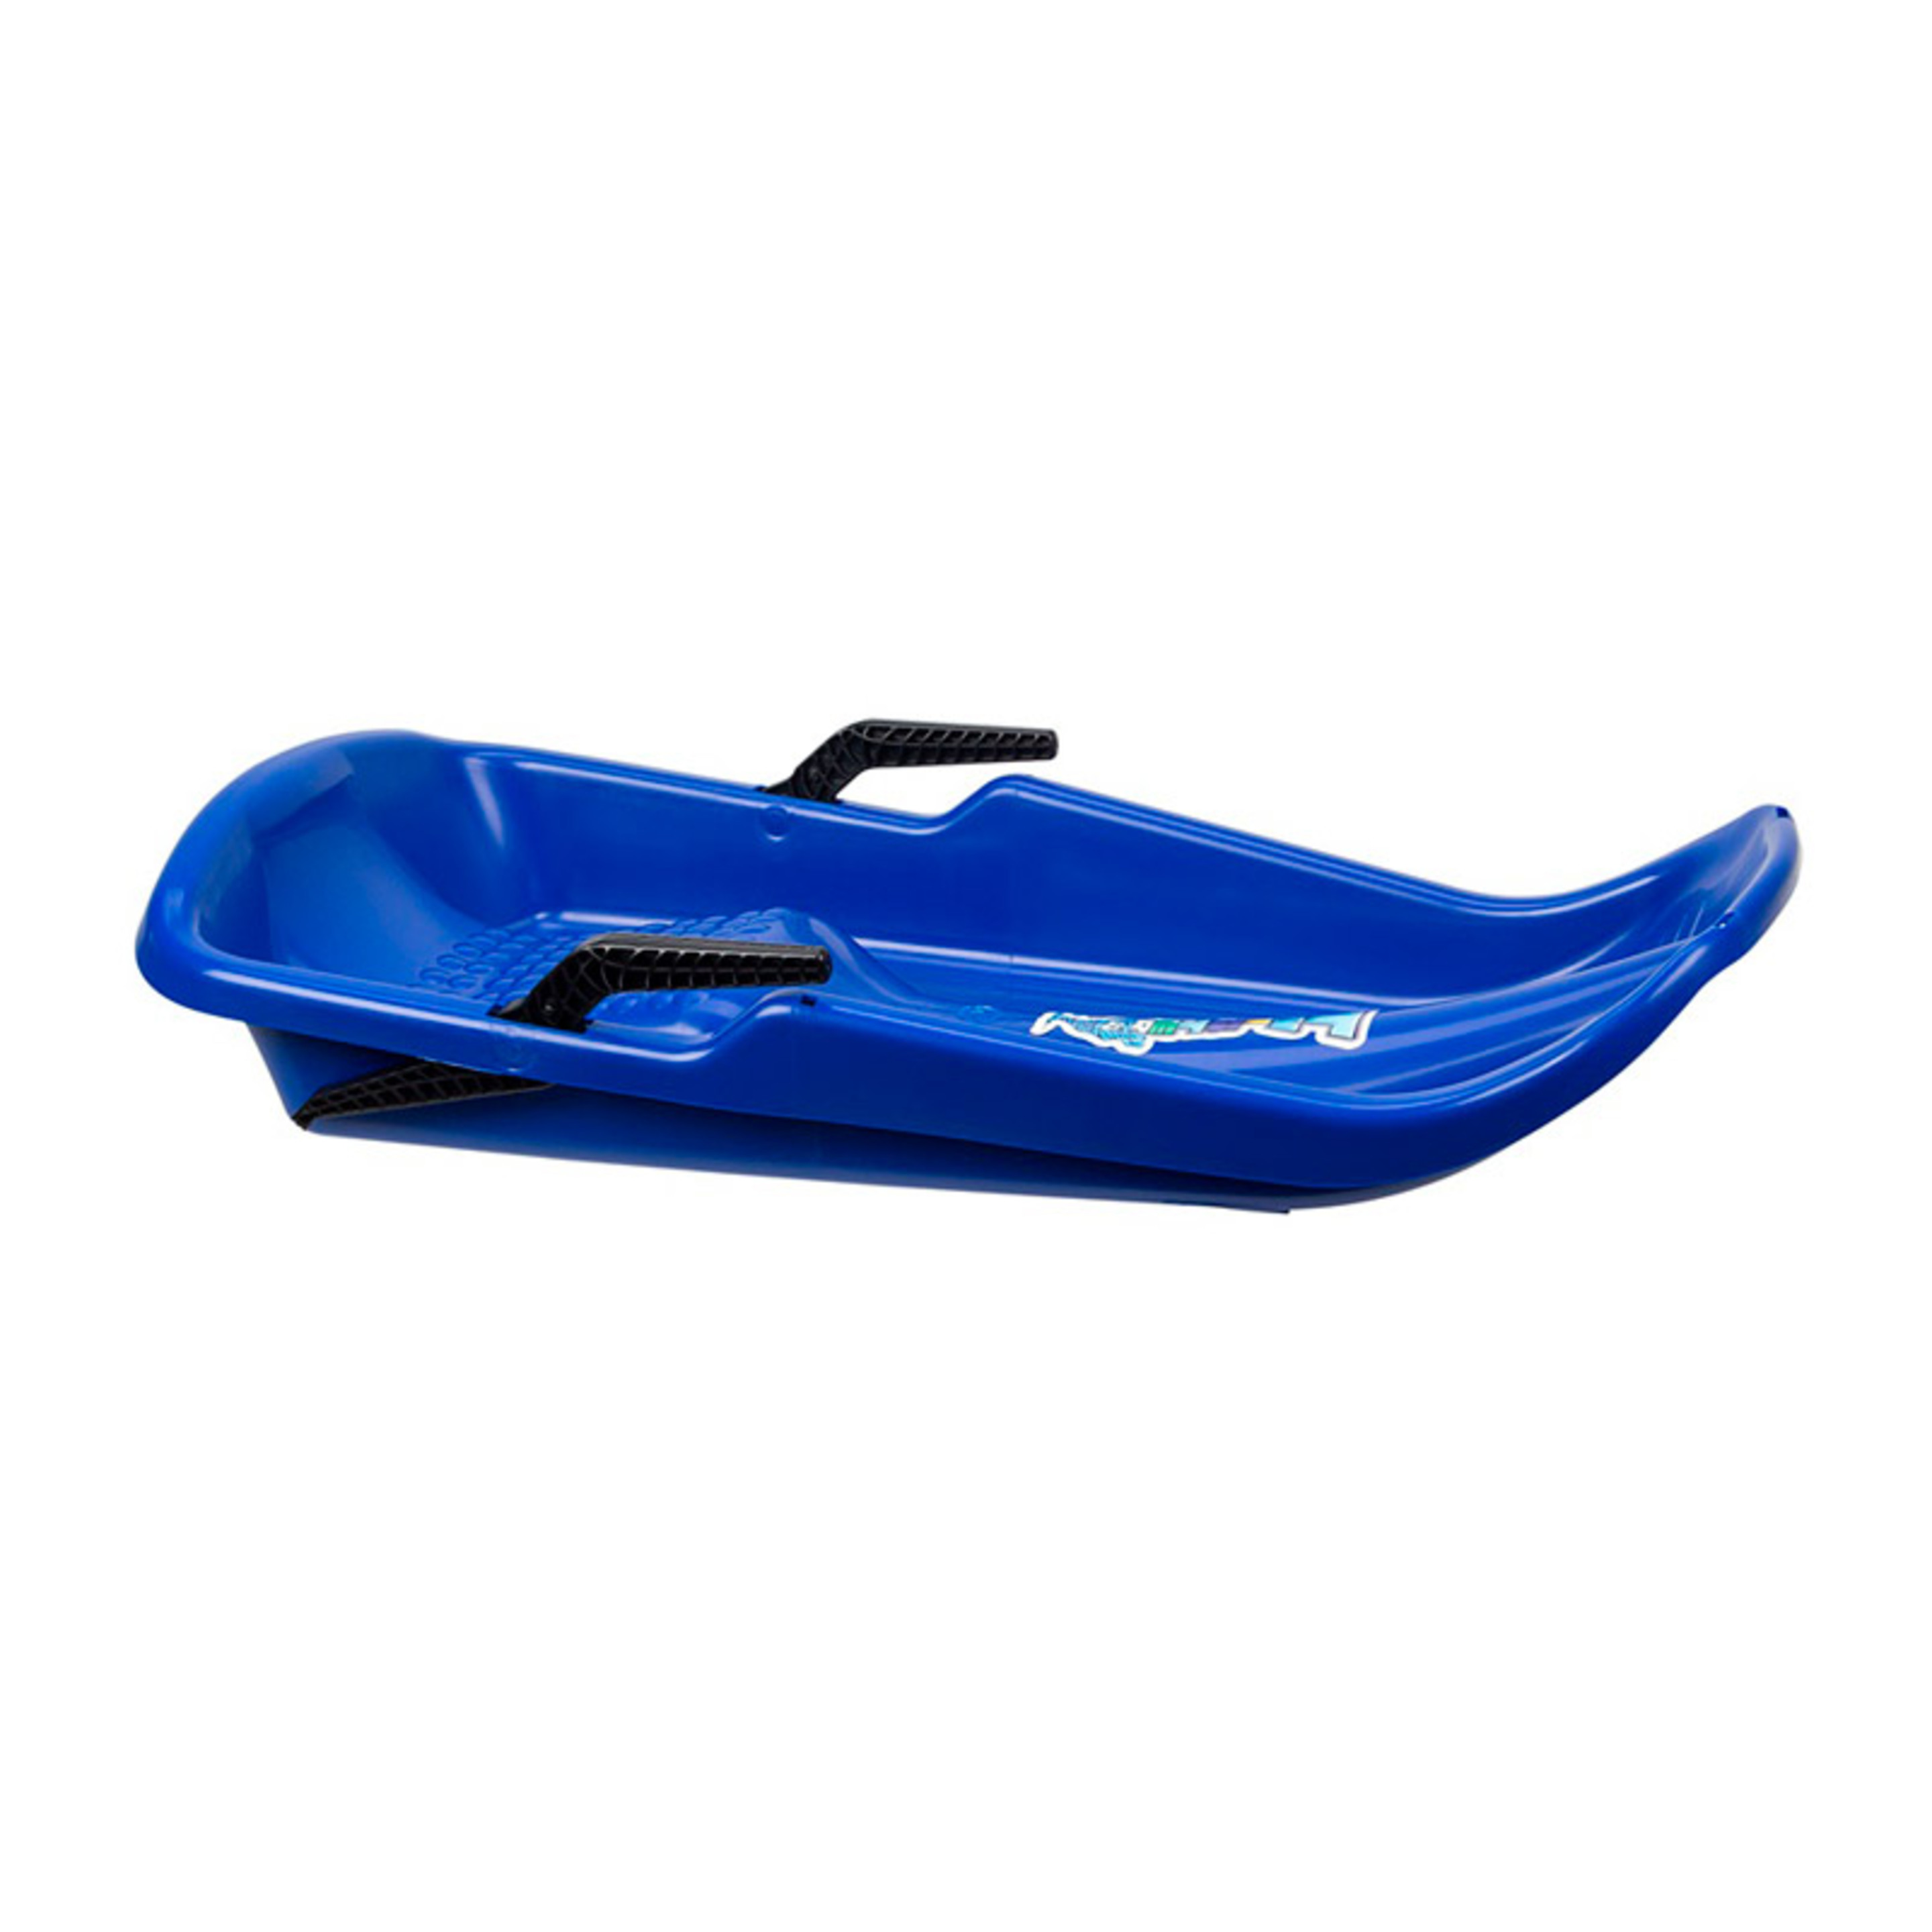 Sr Di Getandgo Trineo Plastico Twister Azul - Azul  MKP